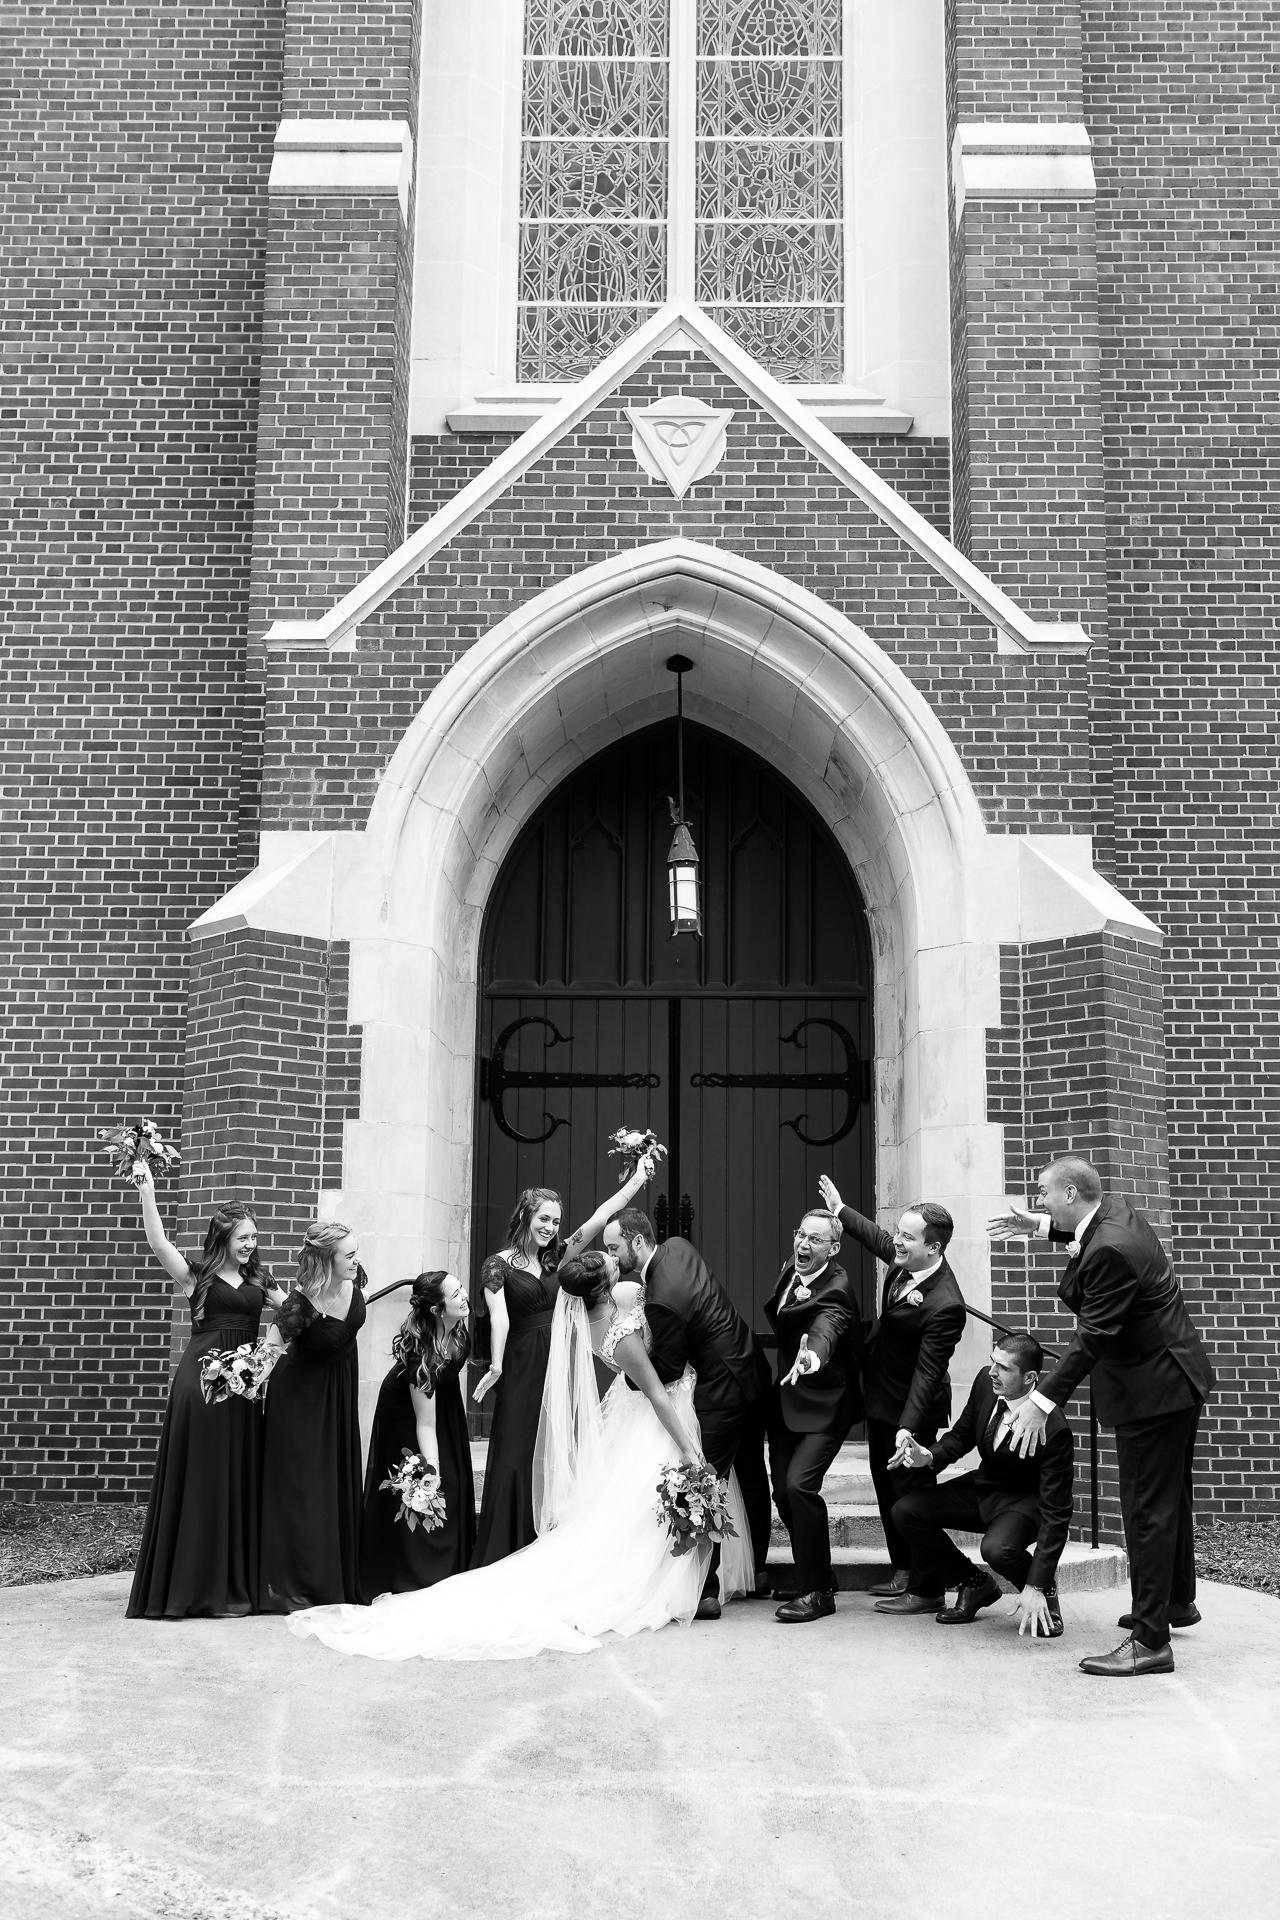 hickory north carolina wedding photography, holy trinity lutheran church wedding, maroon bridesmaids inspiration